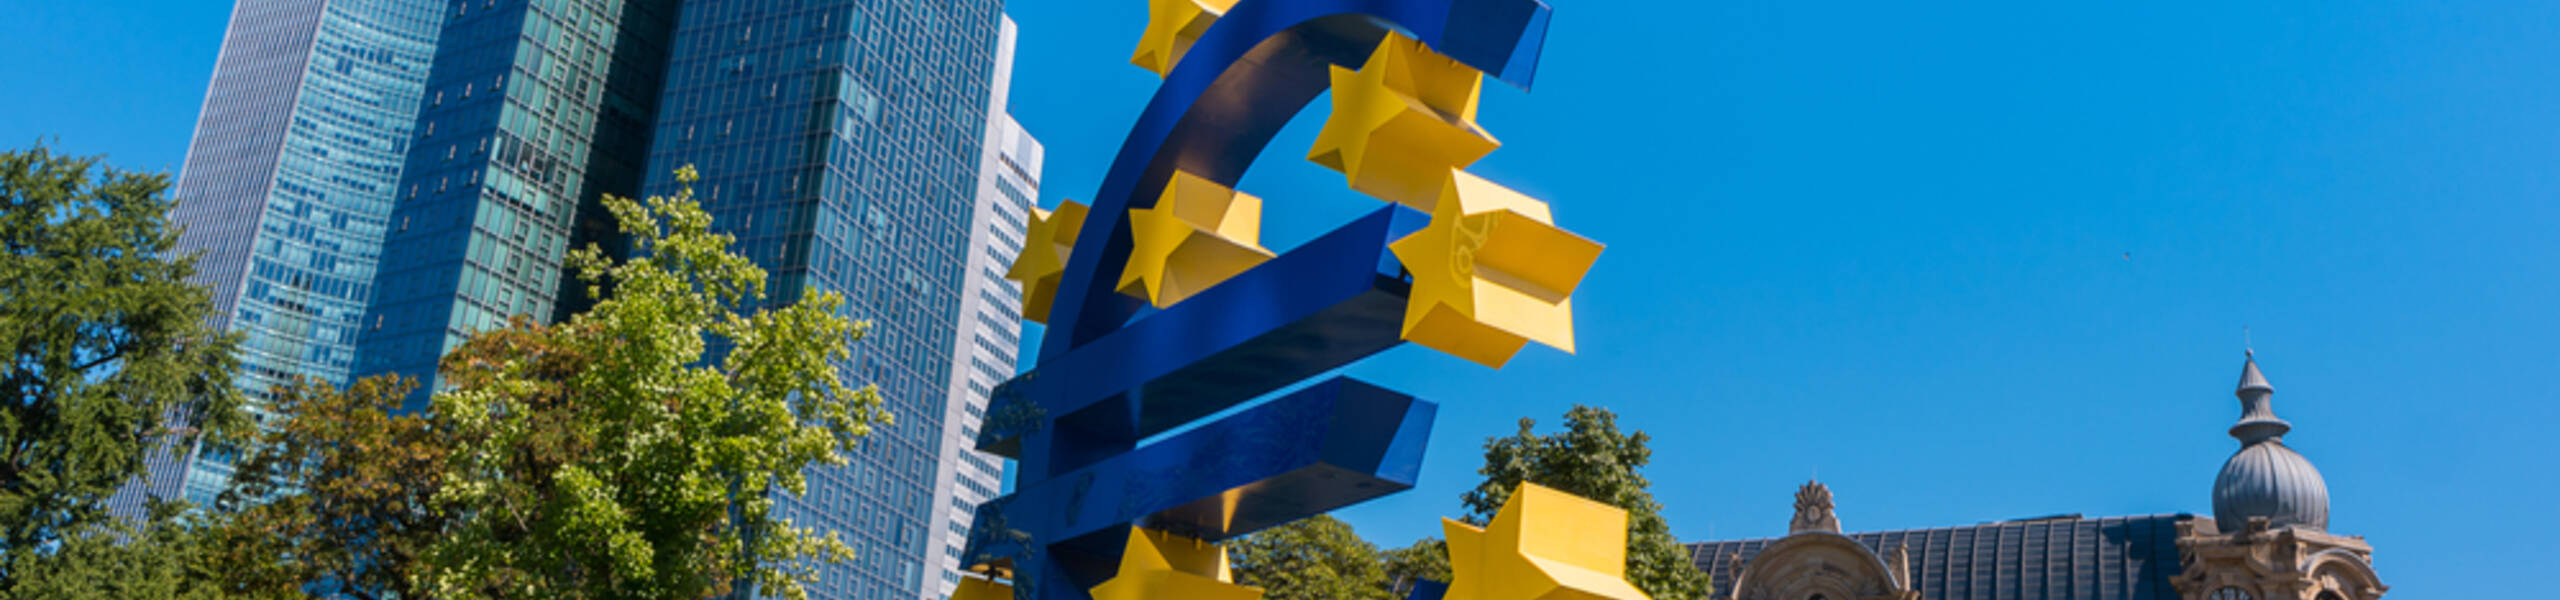 ECB President Draghi Speaks ของธนาคารกลางยุโรป นักลงทุนตลาดเงินจับตามอง EUR